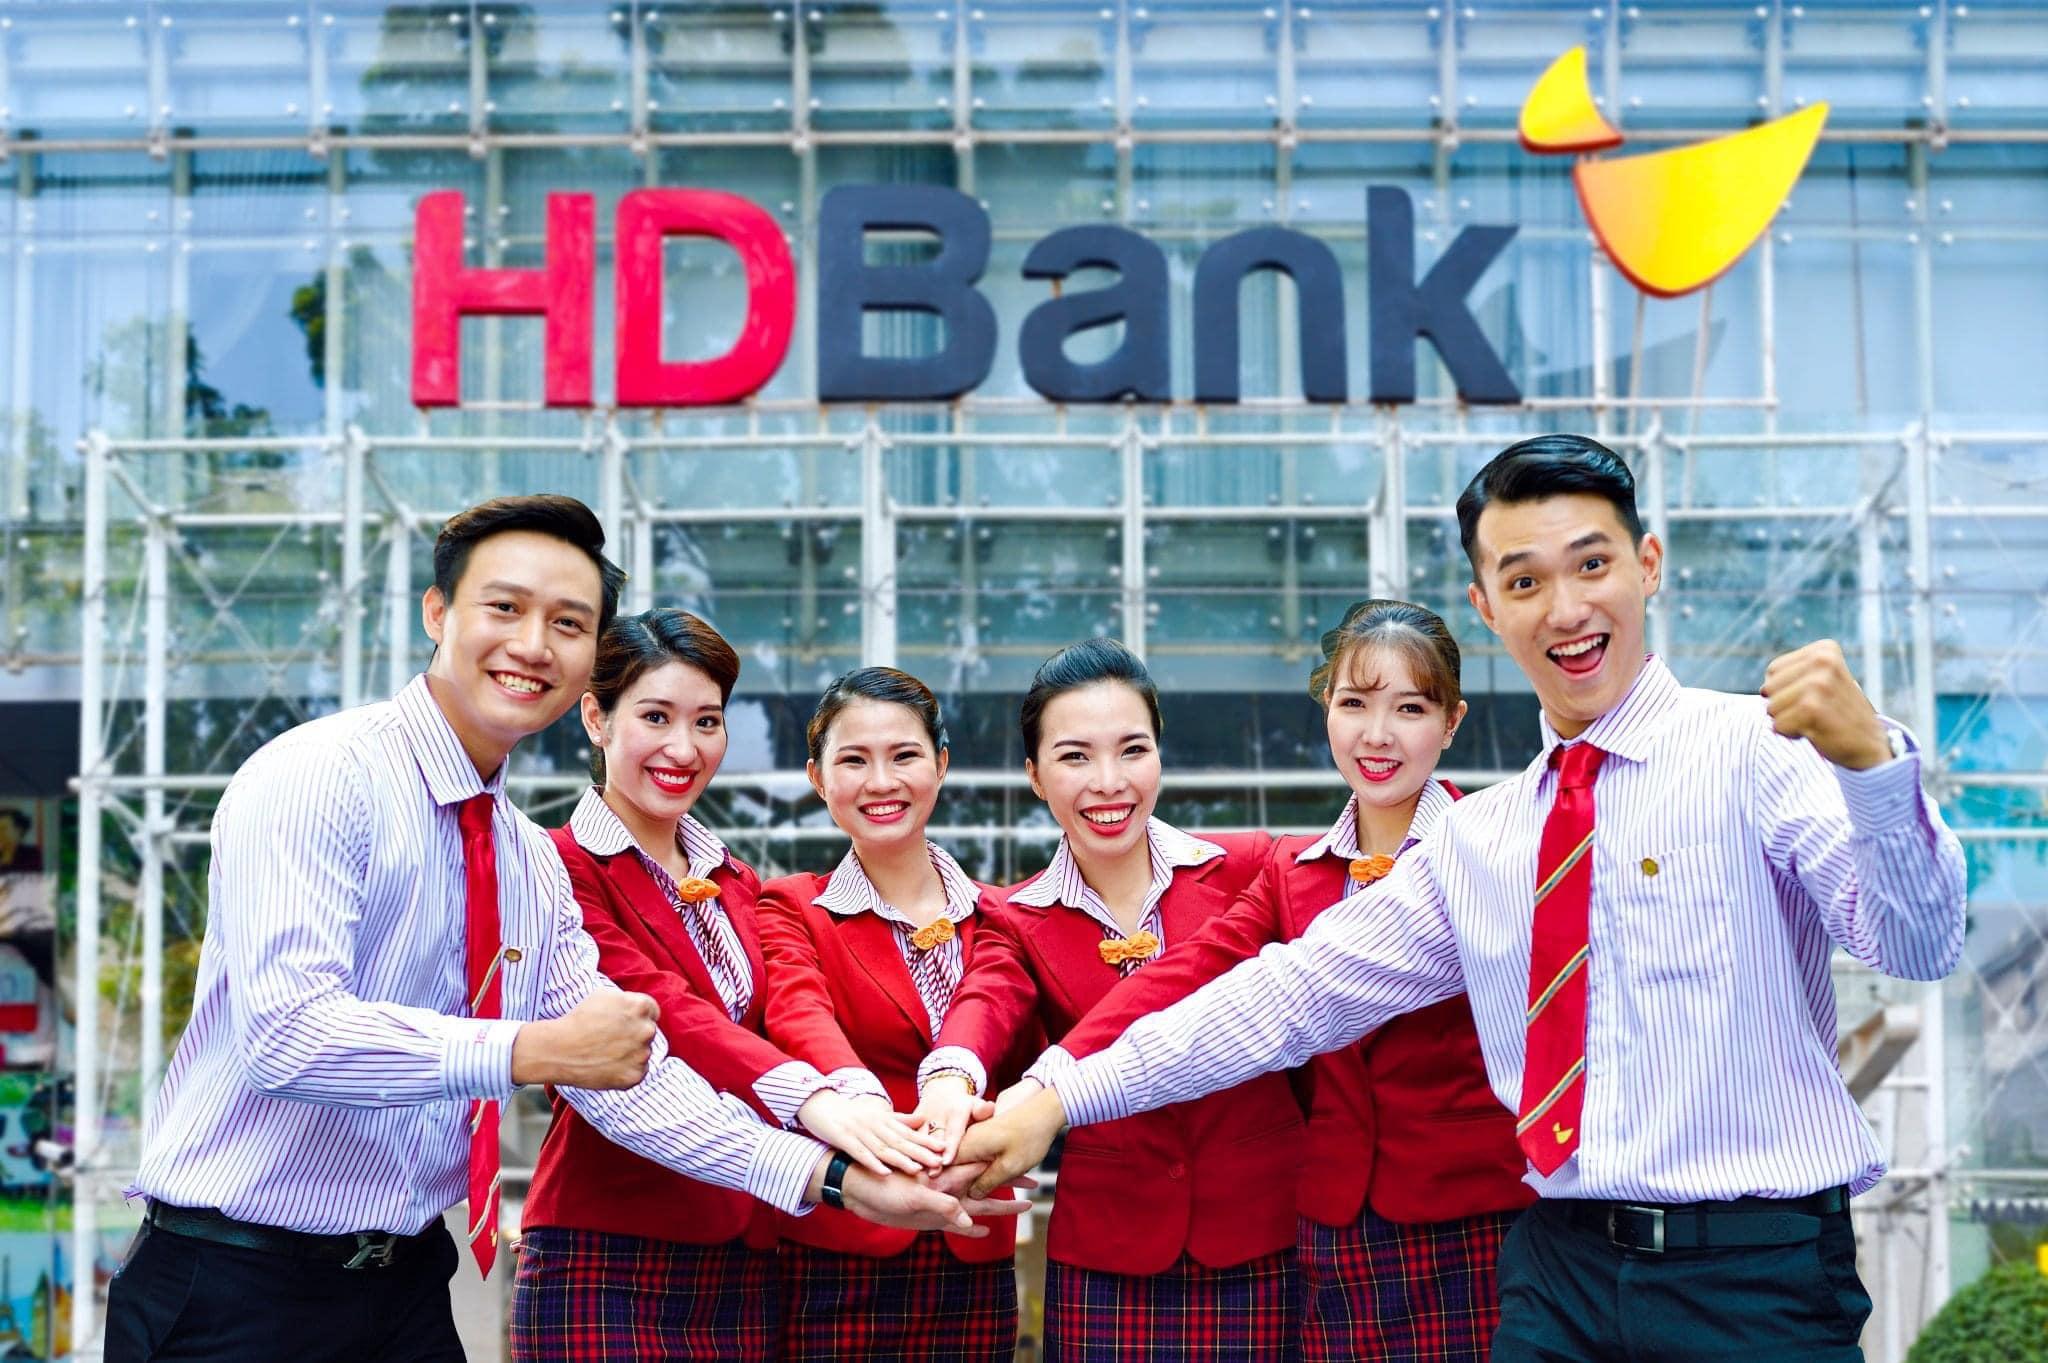 Latest Ngân Hàng TMCP Phát Triển TP.HCM (HDBank) employment/hiring with high salary & attractive benefits